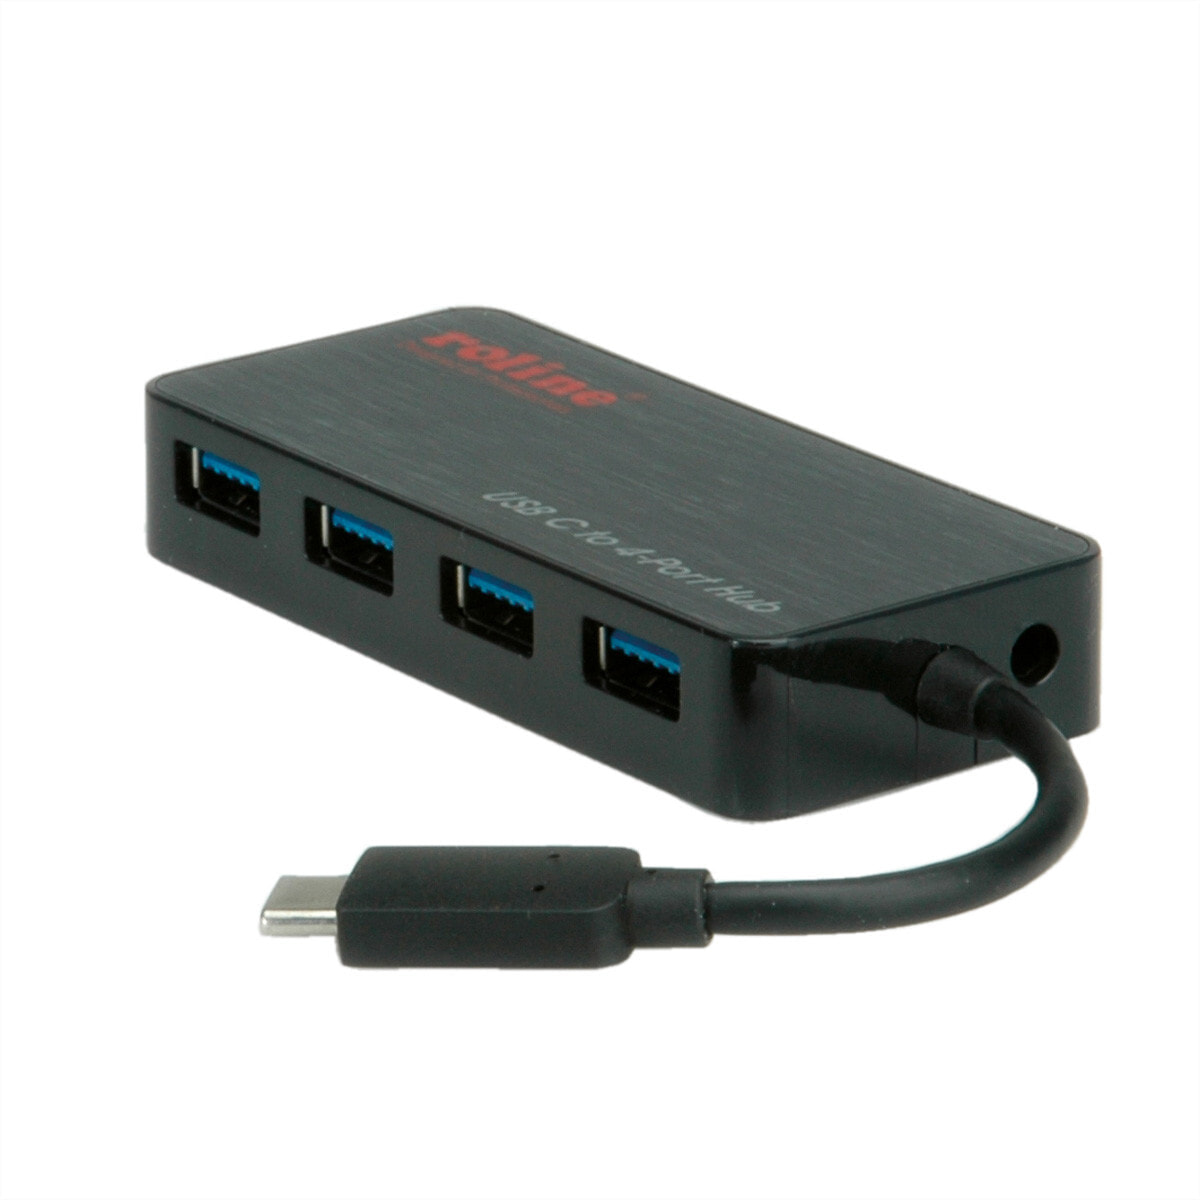 ROLINE USB 3.0 Hub, 4 Ports, with Power Supply 14.02.5035